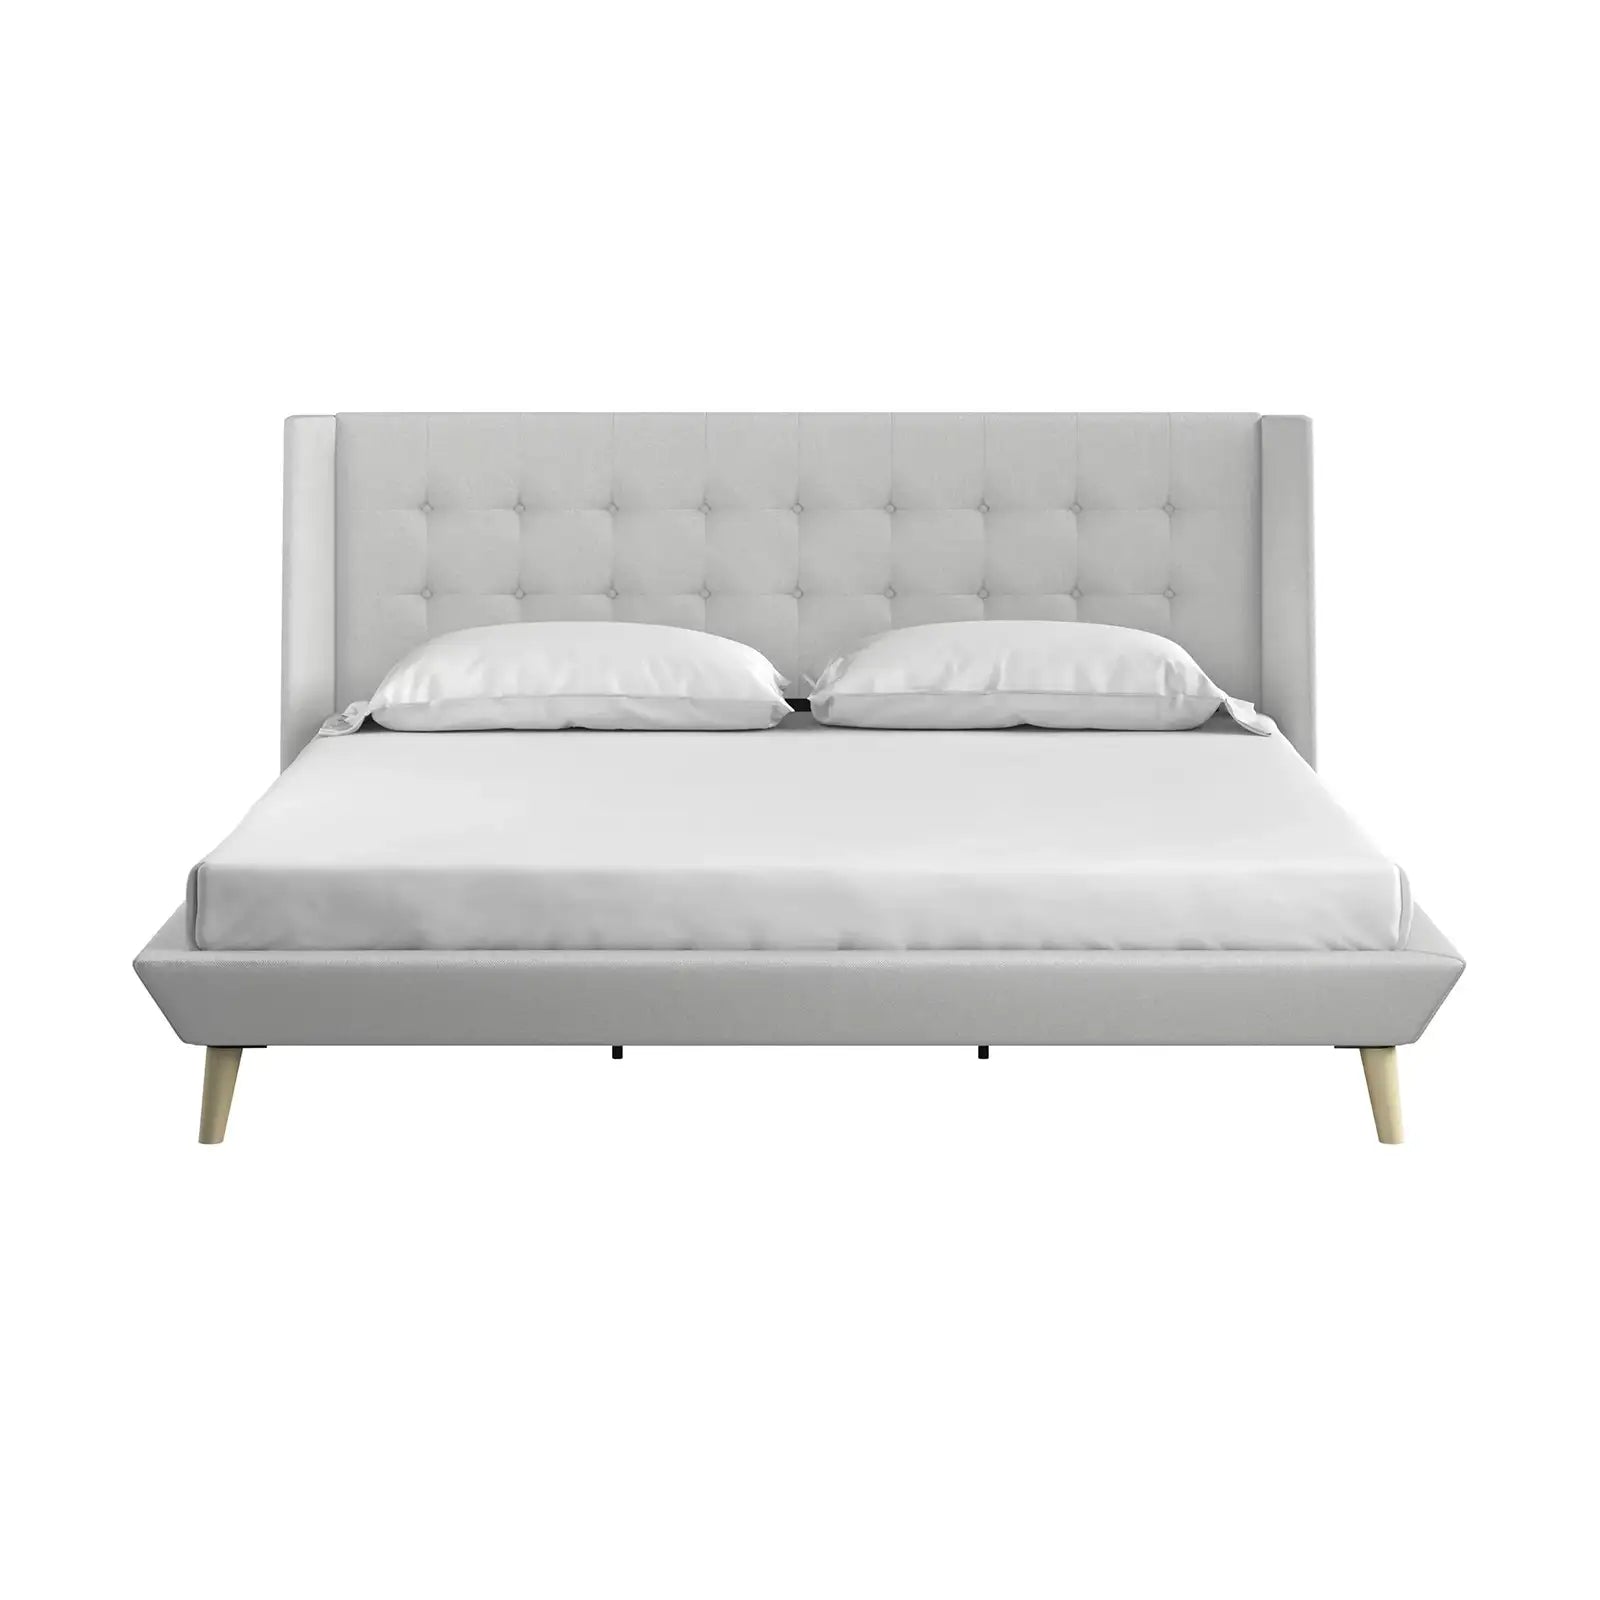 Upholstered Bed with Low Profile Platform Frame